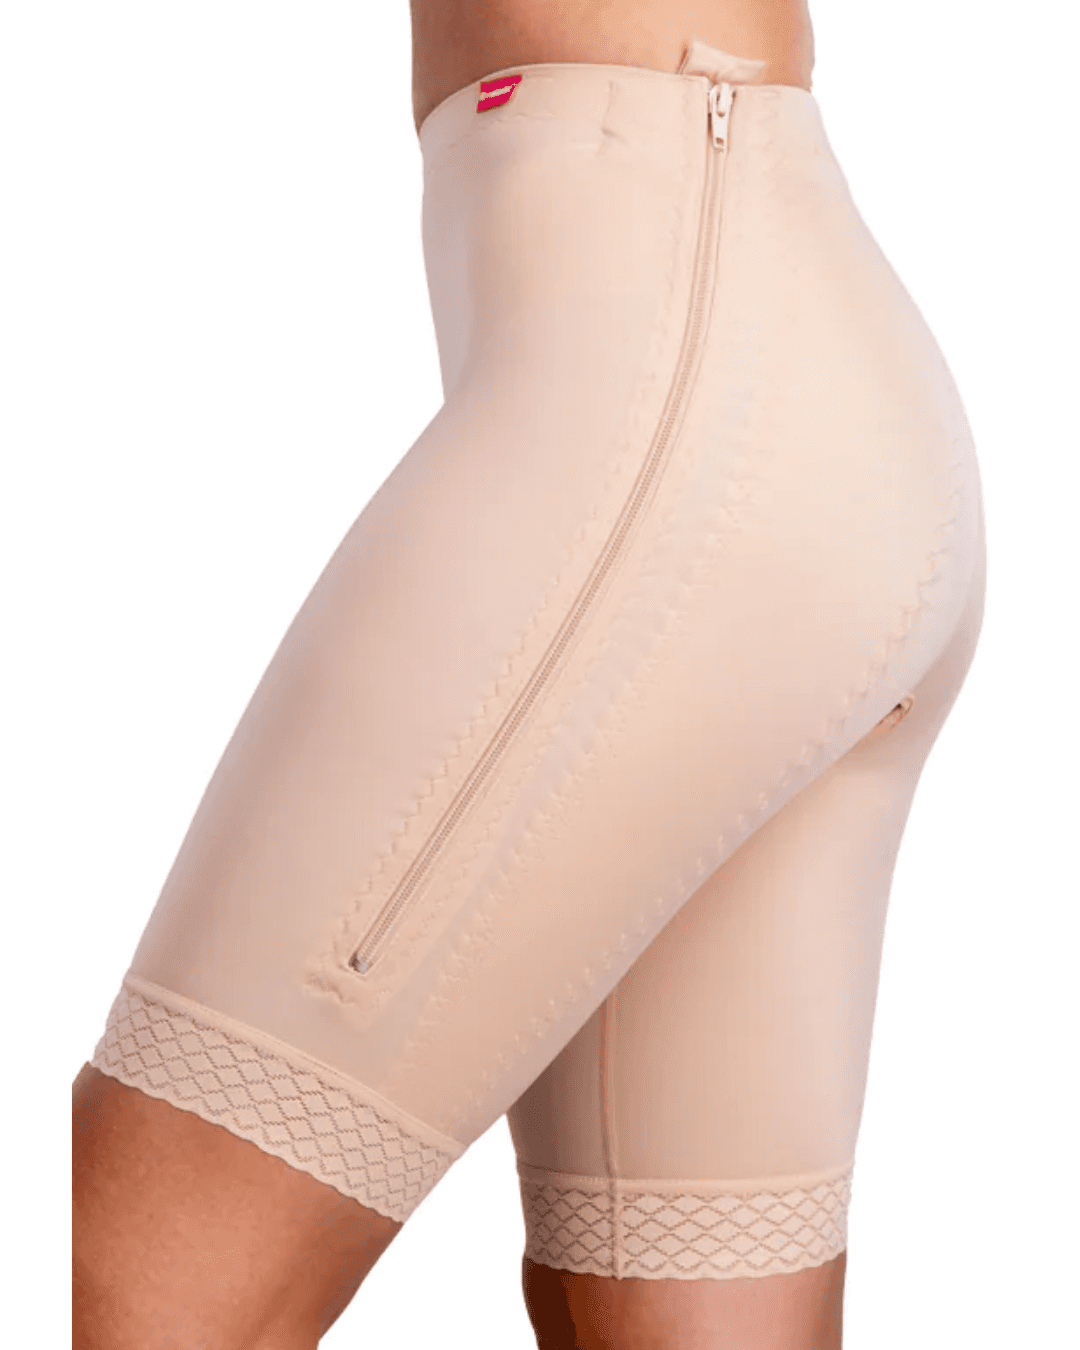 Post Liposuction Compression Garments – macom-medical-shop